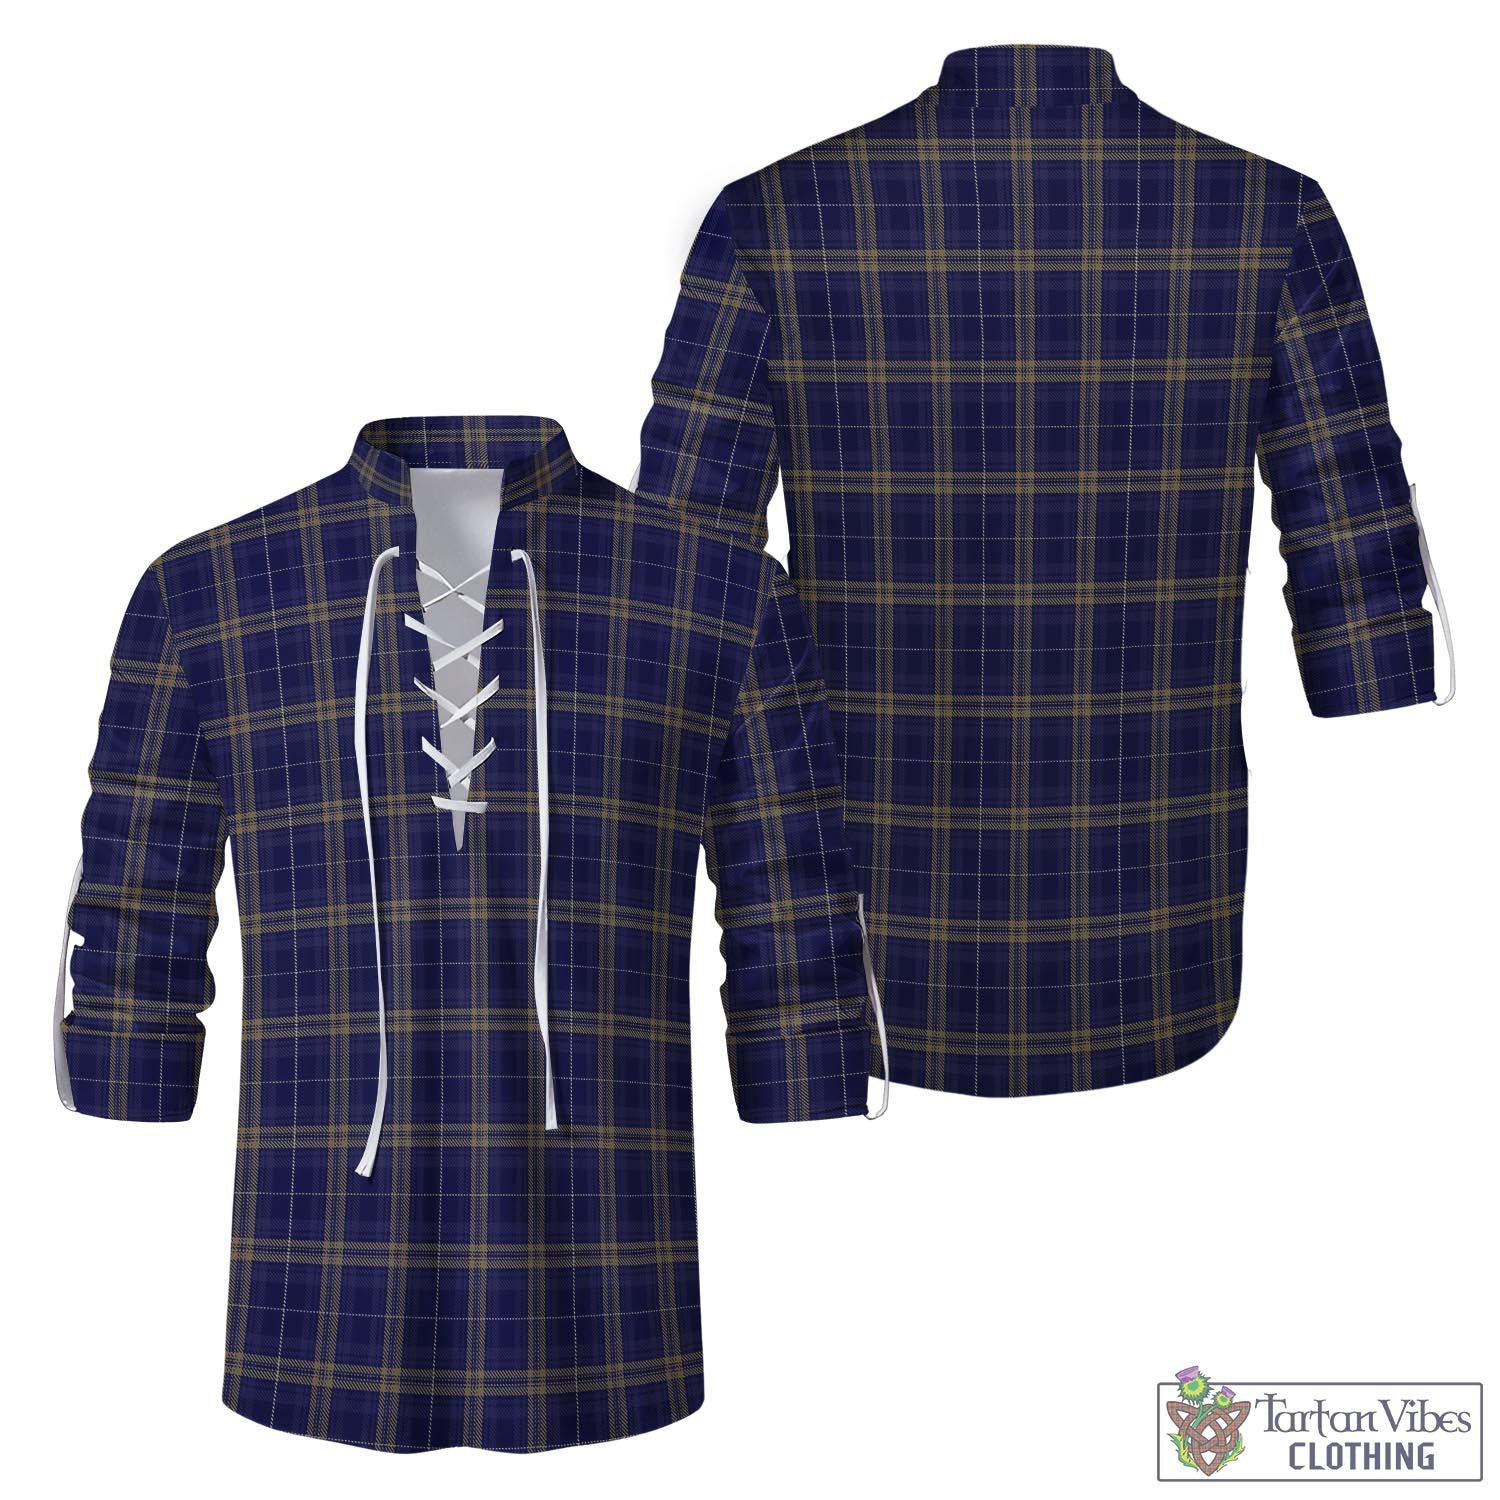 Tartan Vibes Clothing Rhys of Wales Tartan Men's Scottish Traditional Jacobite Ghillie Kilt Shirt